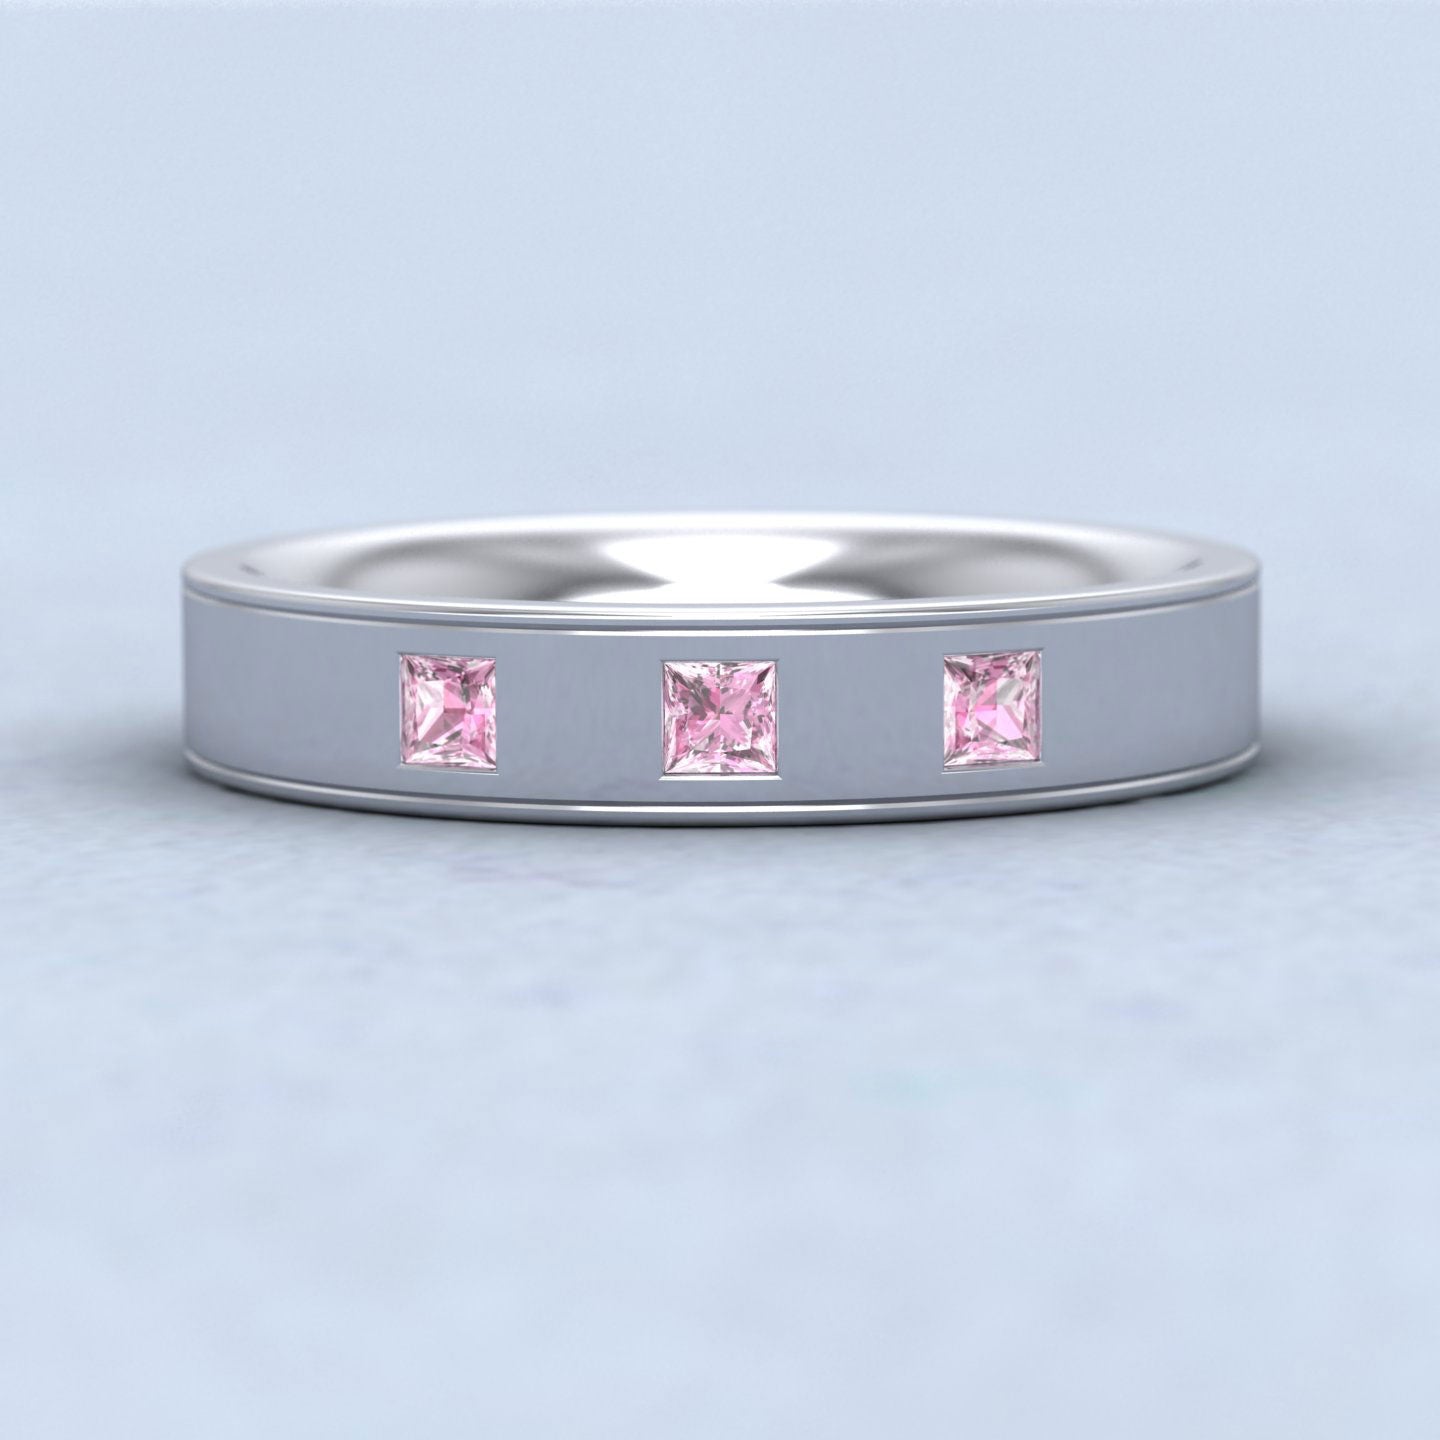 Princess Cut Pink Sapphire And Line Patterned 500 Palladium 4mm Wedding Ring